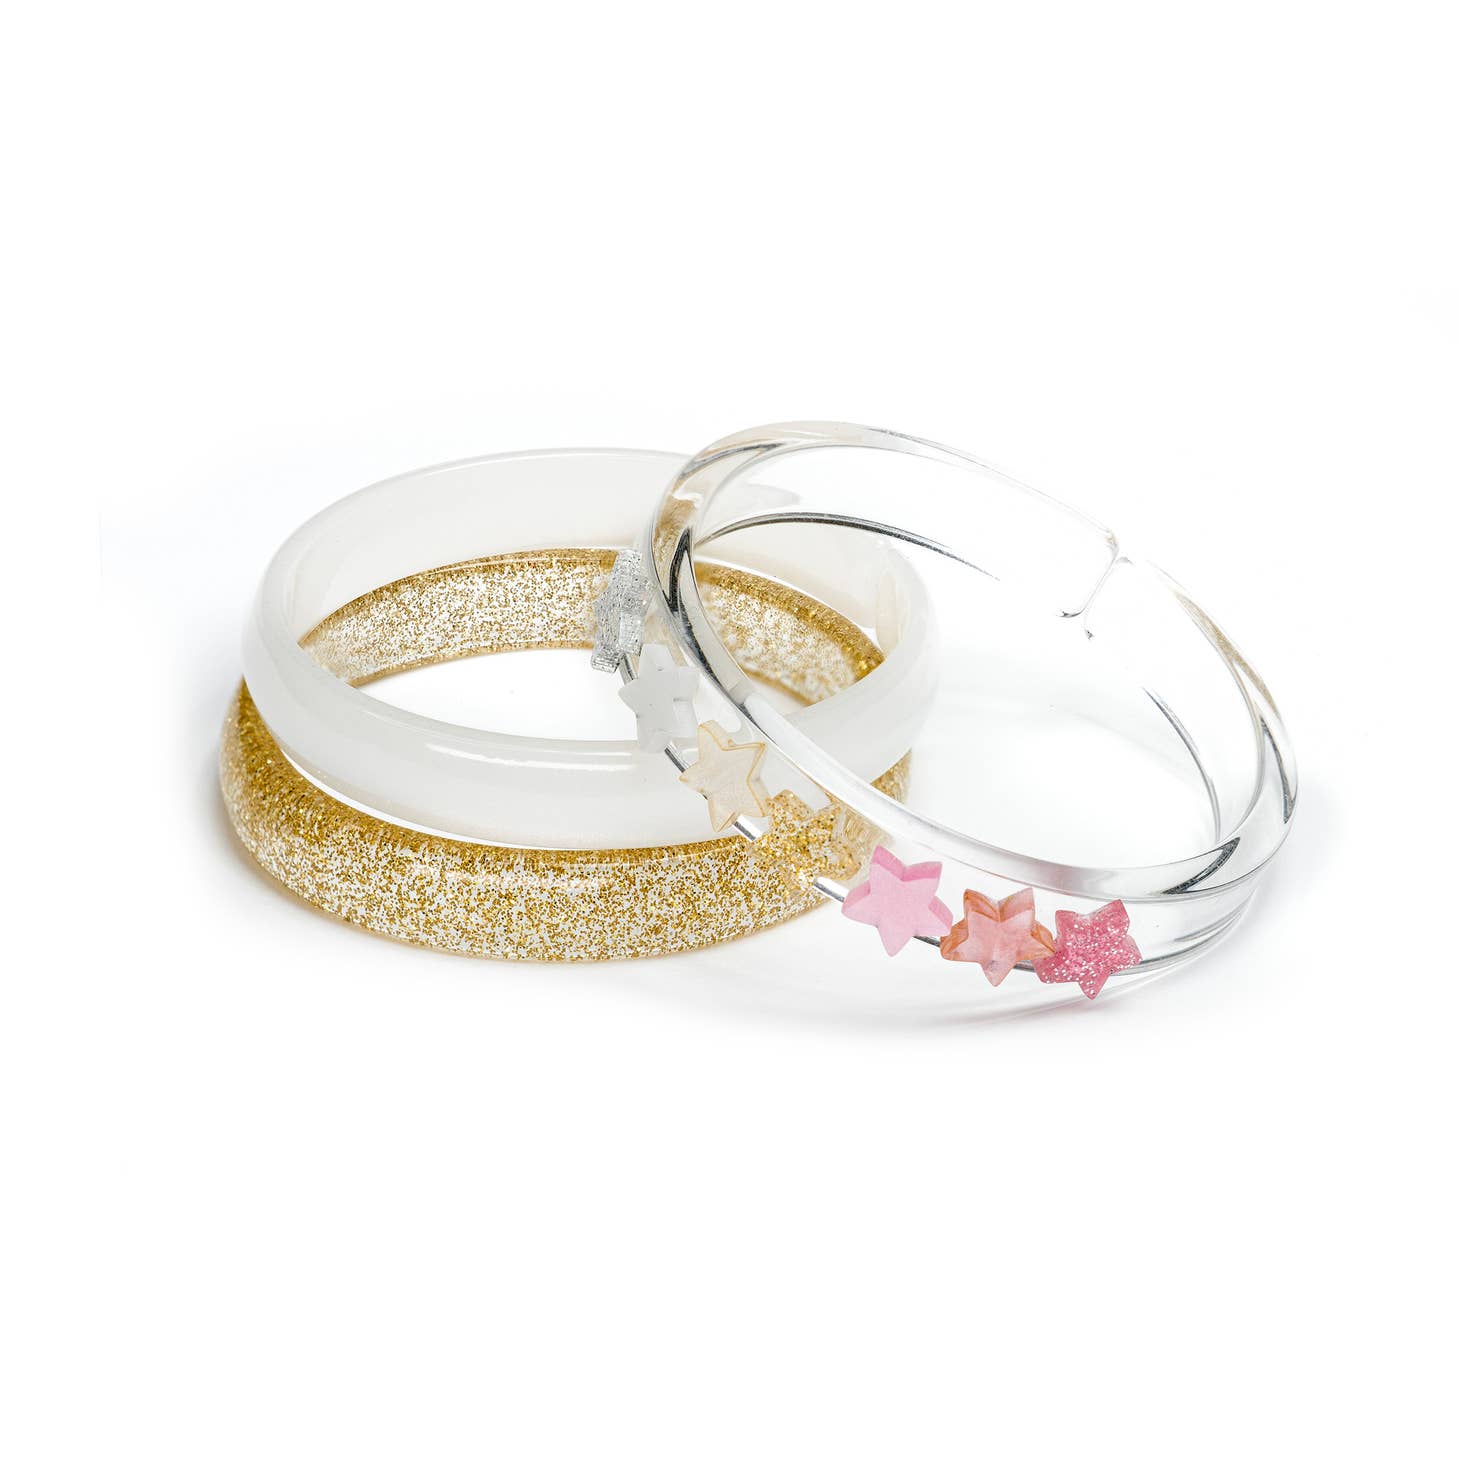 Stars Pearlized Pink Glitter Gold Mix Acrylic Bangle Bracelets | Set of 3